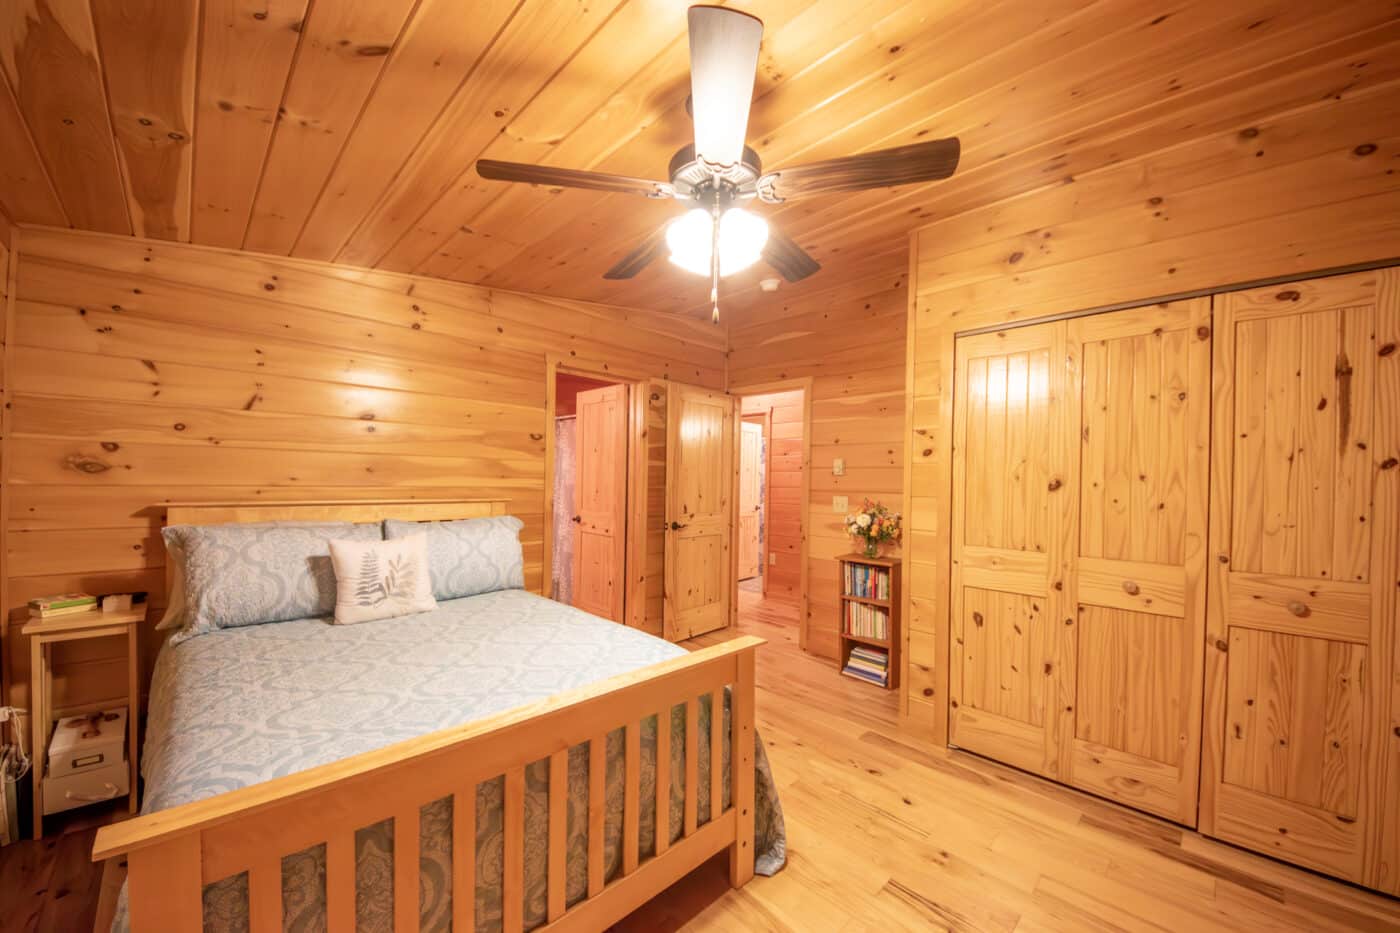 musketeer bedroom interior log cabin